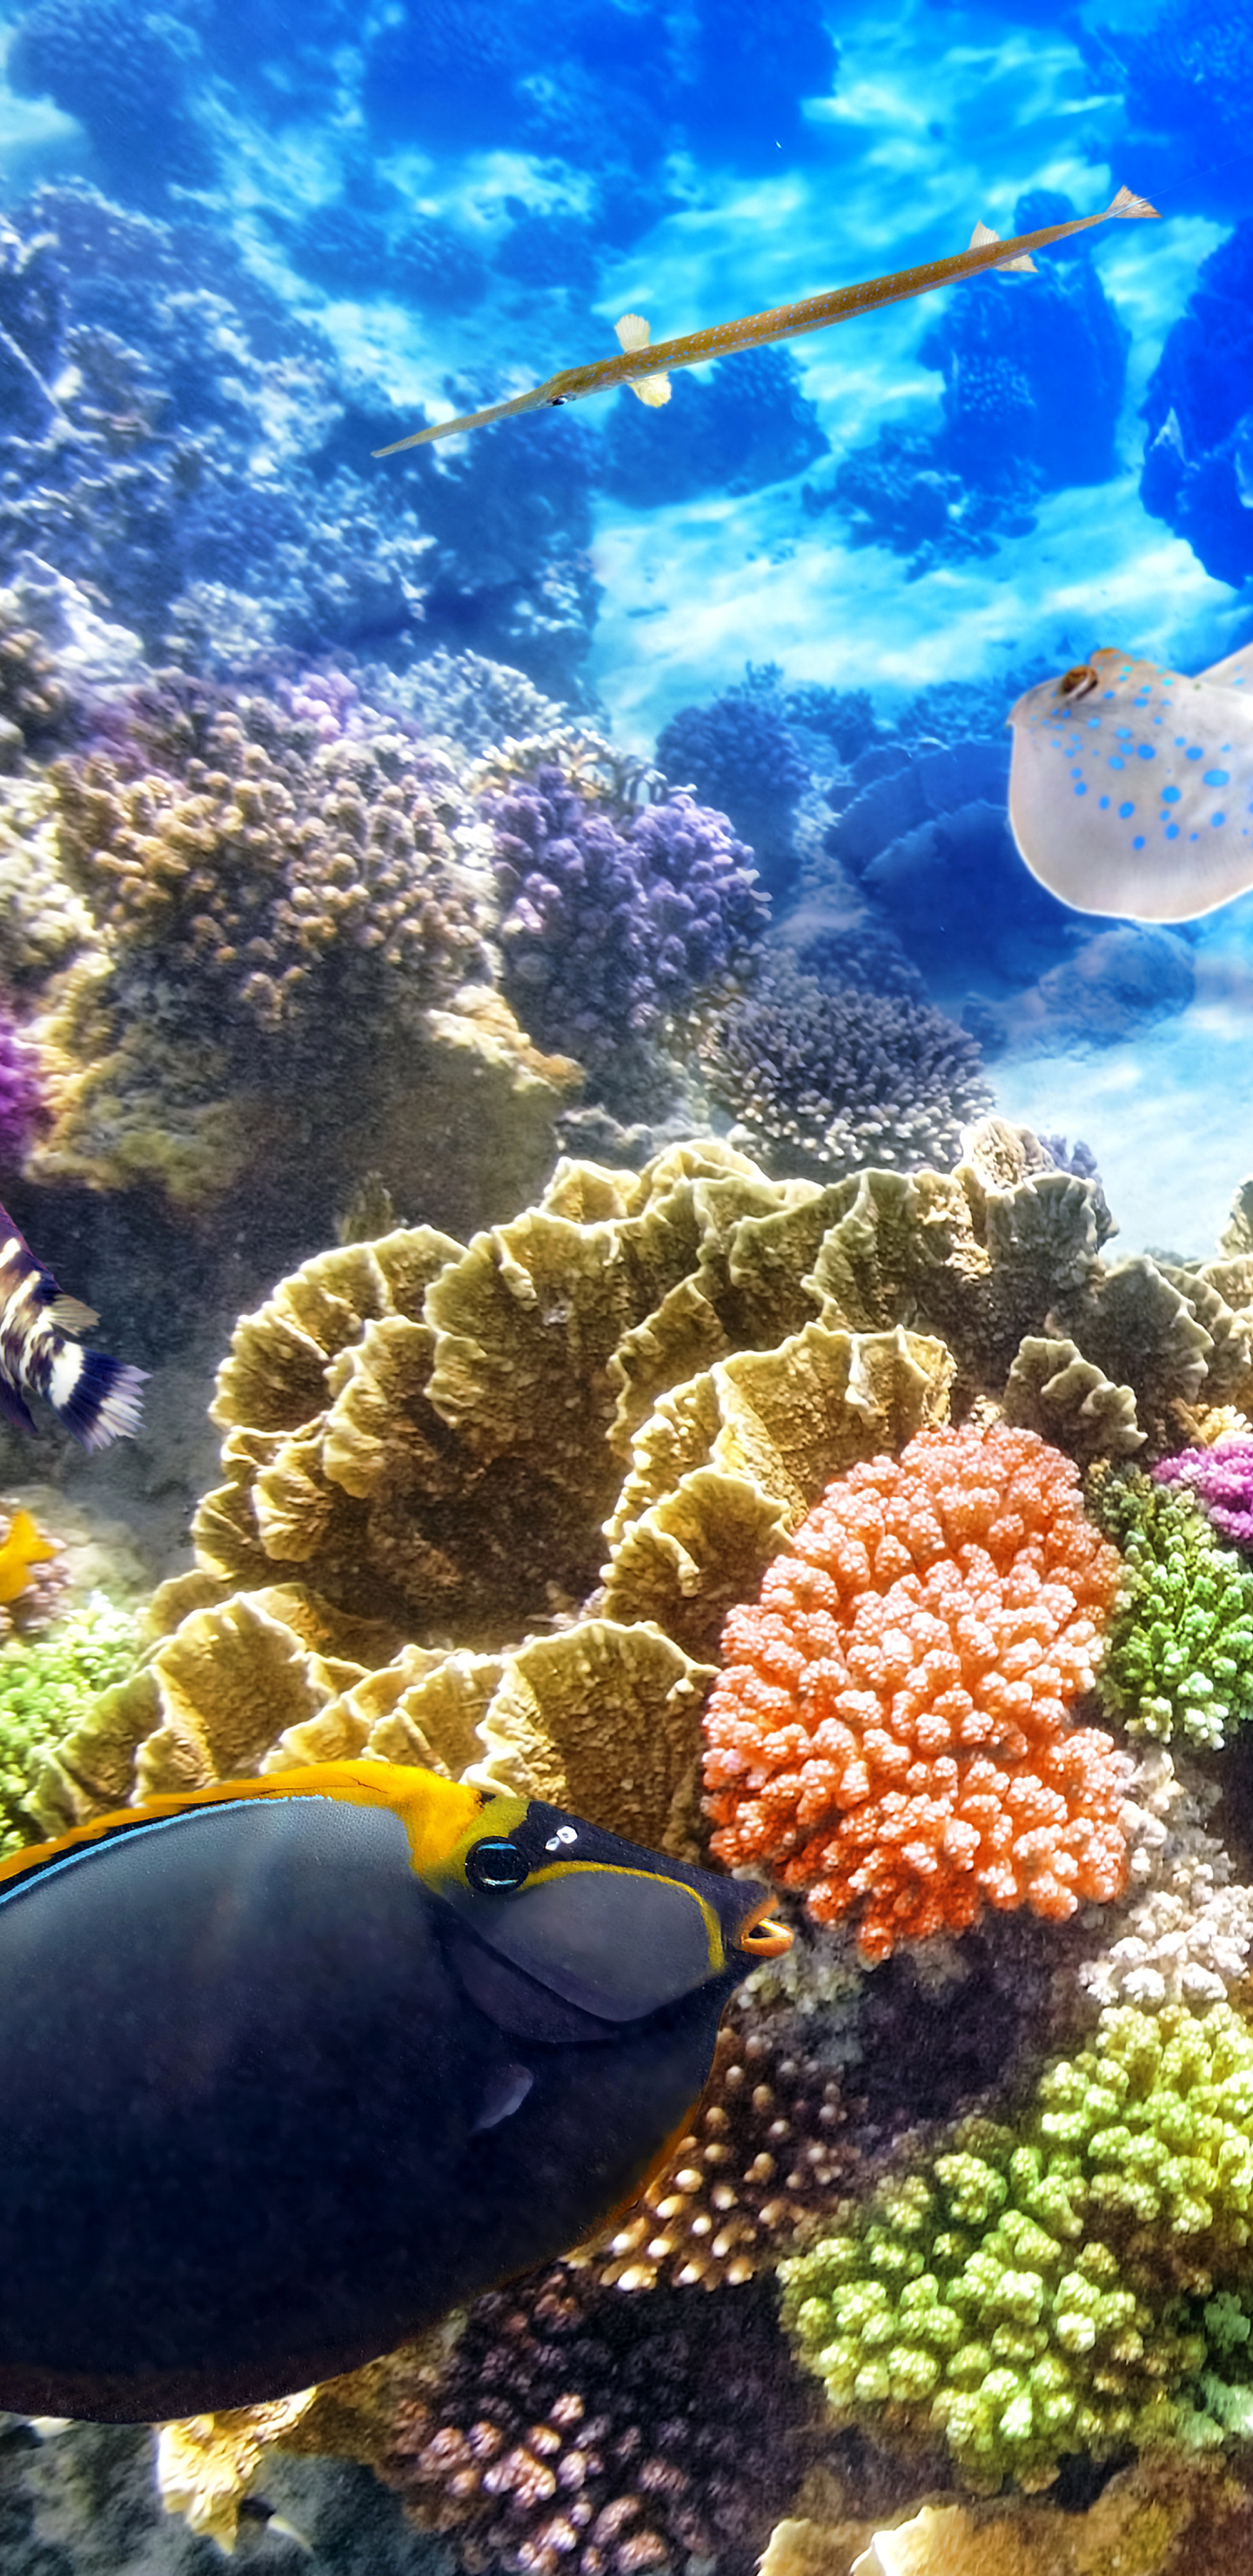 1162363 baixar imagens animais, peixe, coral, corais, embaixo da agua, peixes - papéis de parede e protetores de tela gratuitamente